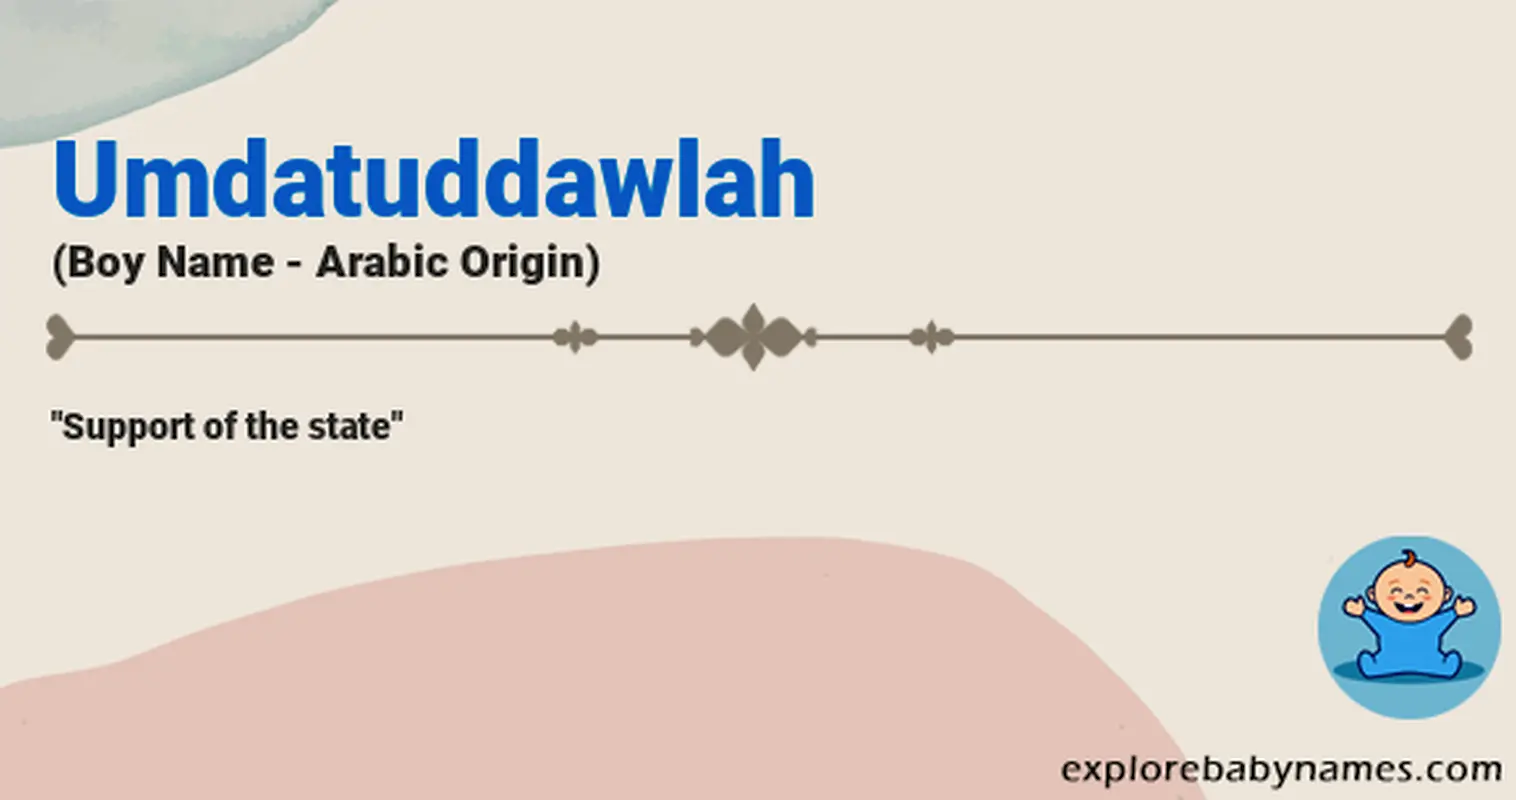 Meaning of Umdatuddawlah